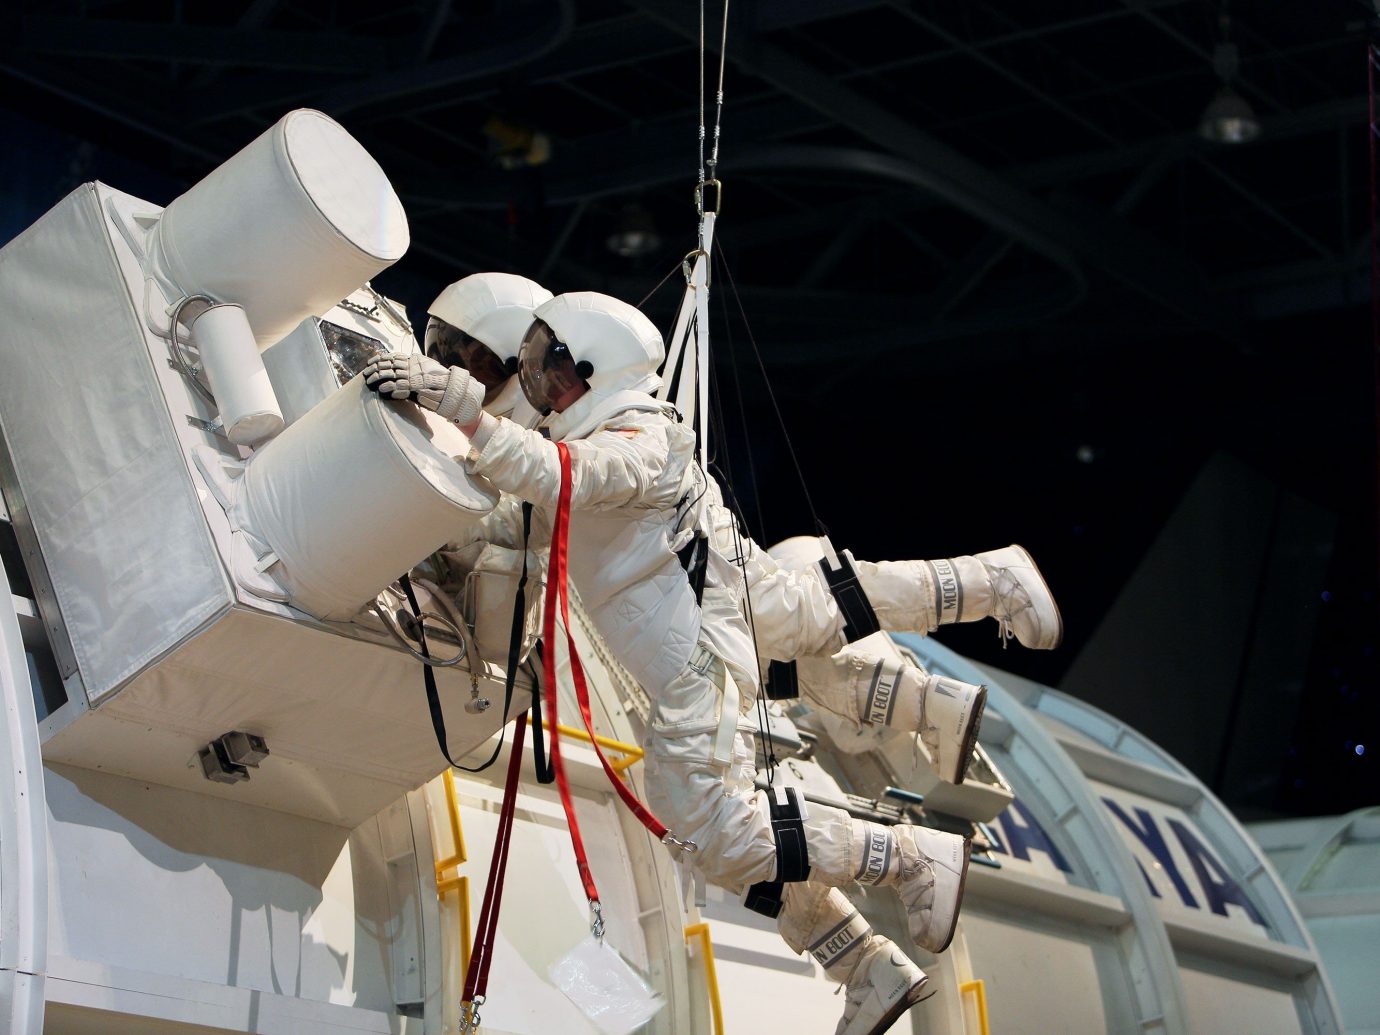 Trip Ideas astronaut white machine vehicle space robot tourist attraction